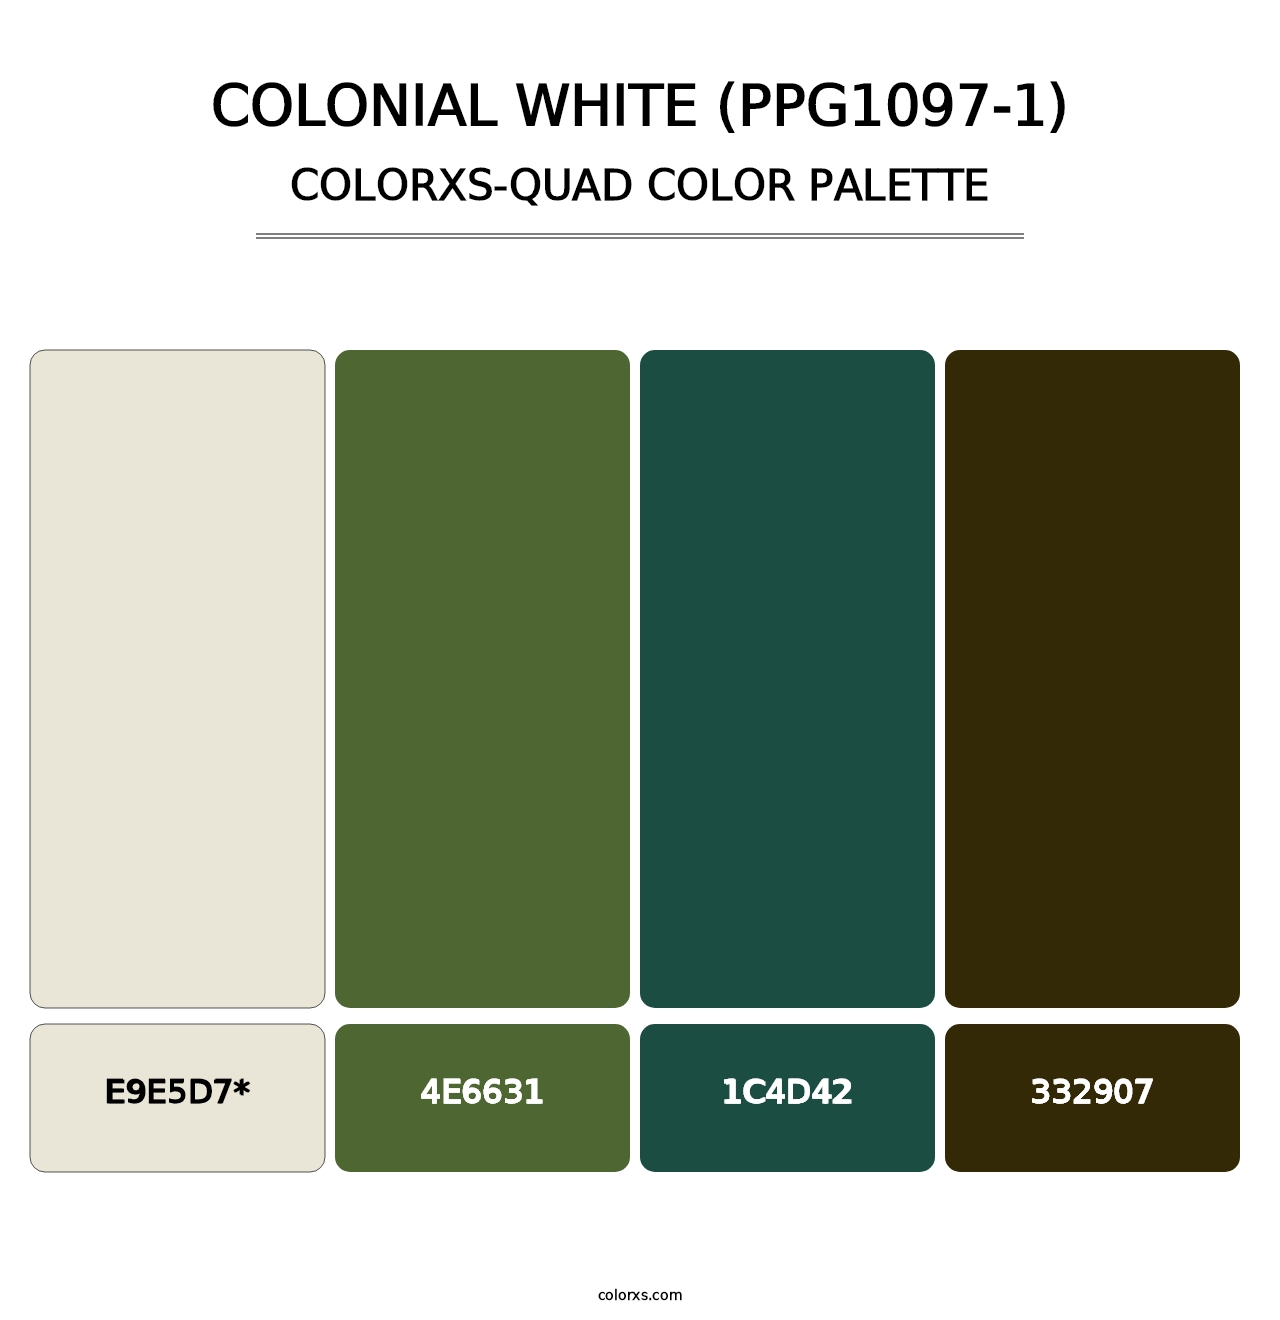 Colonial White (PPG1097-1) - Colorxs Quad Palette